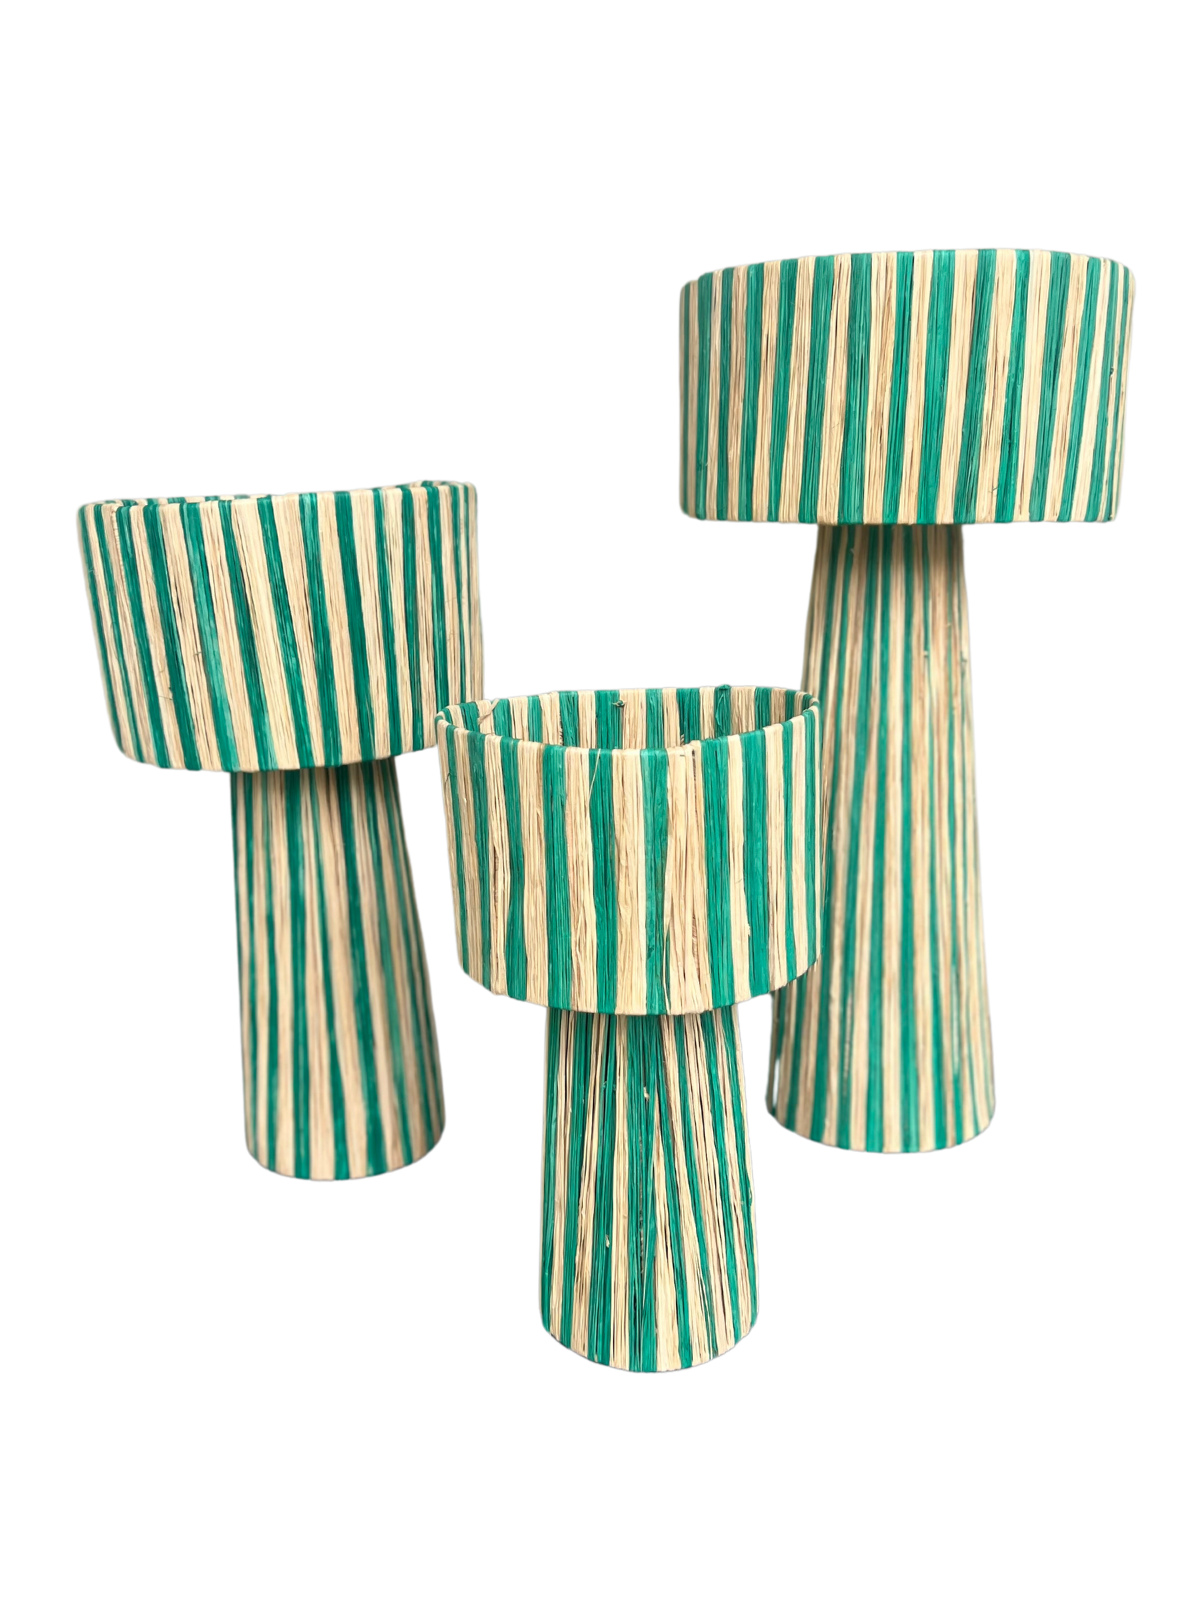 Raffia Lamp, Series 1 - Jade Stripe